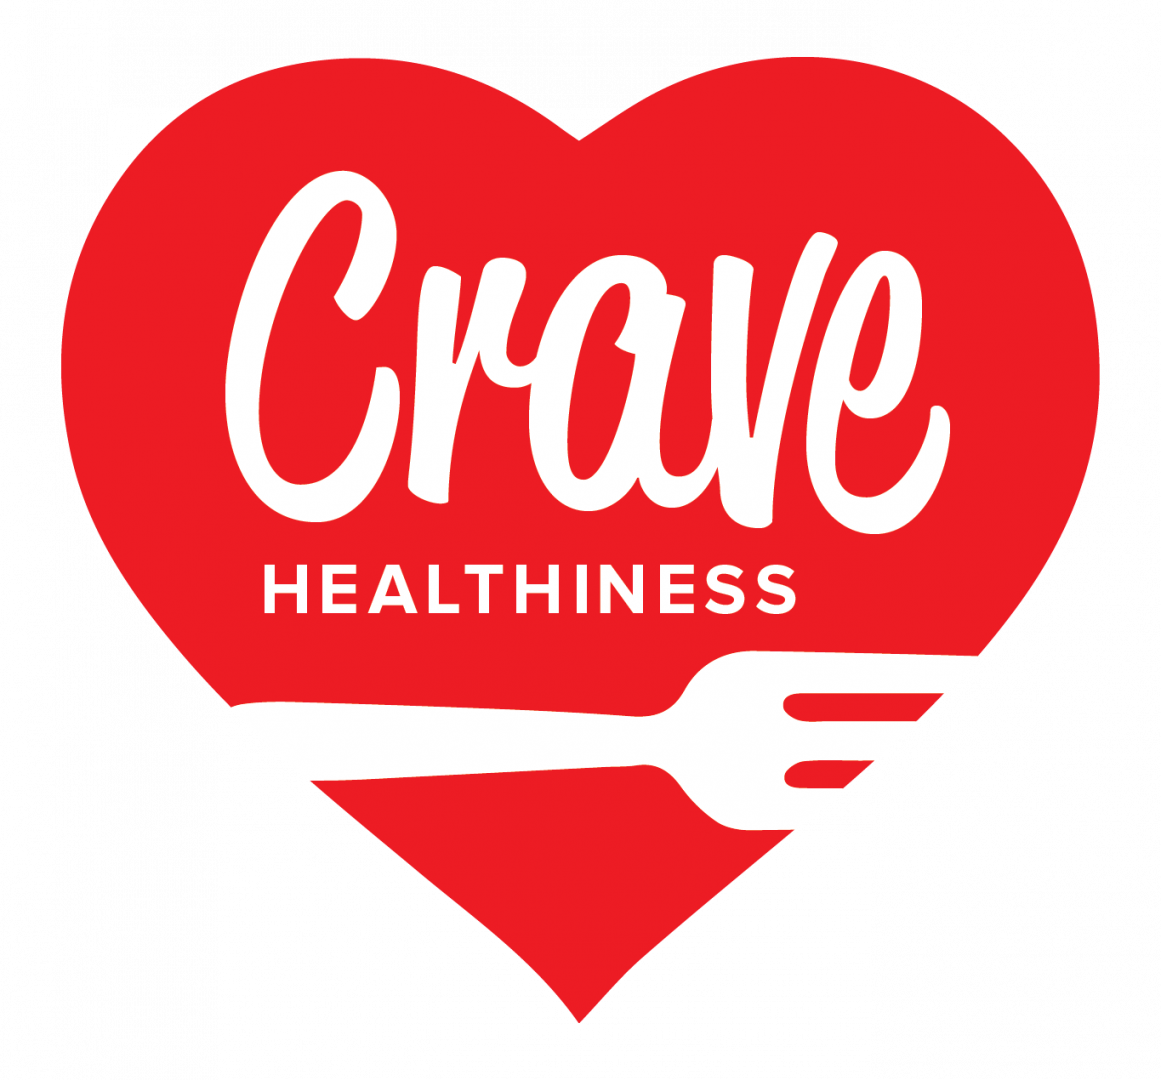 Crave Healthiness